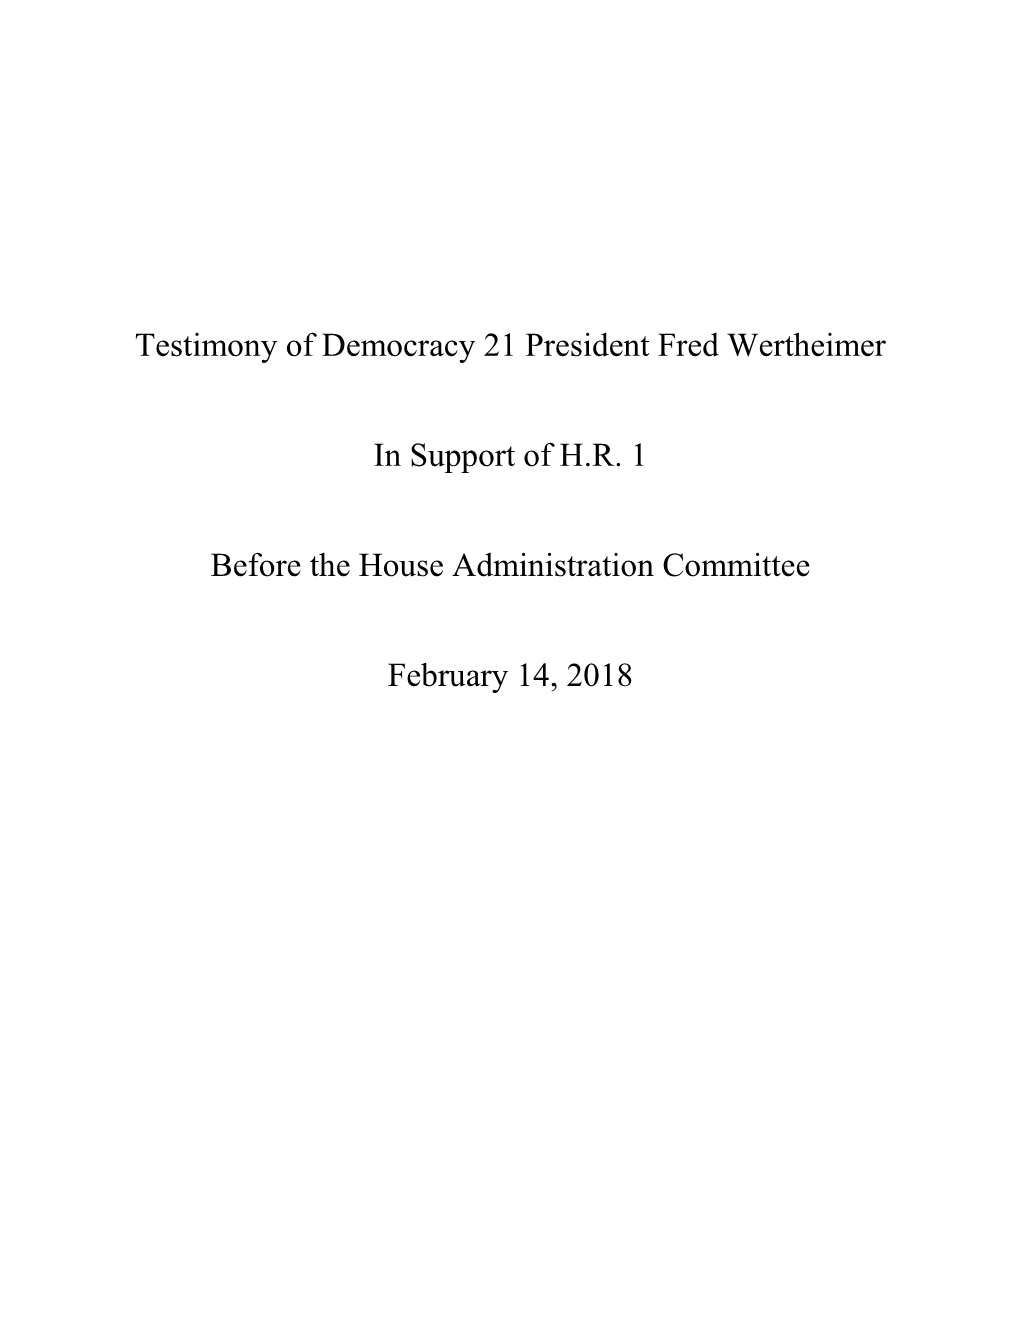 Testimony of Democracy 21 President Fred Wertheimer in Support of HR 1